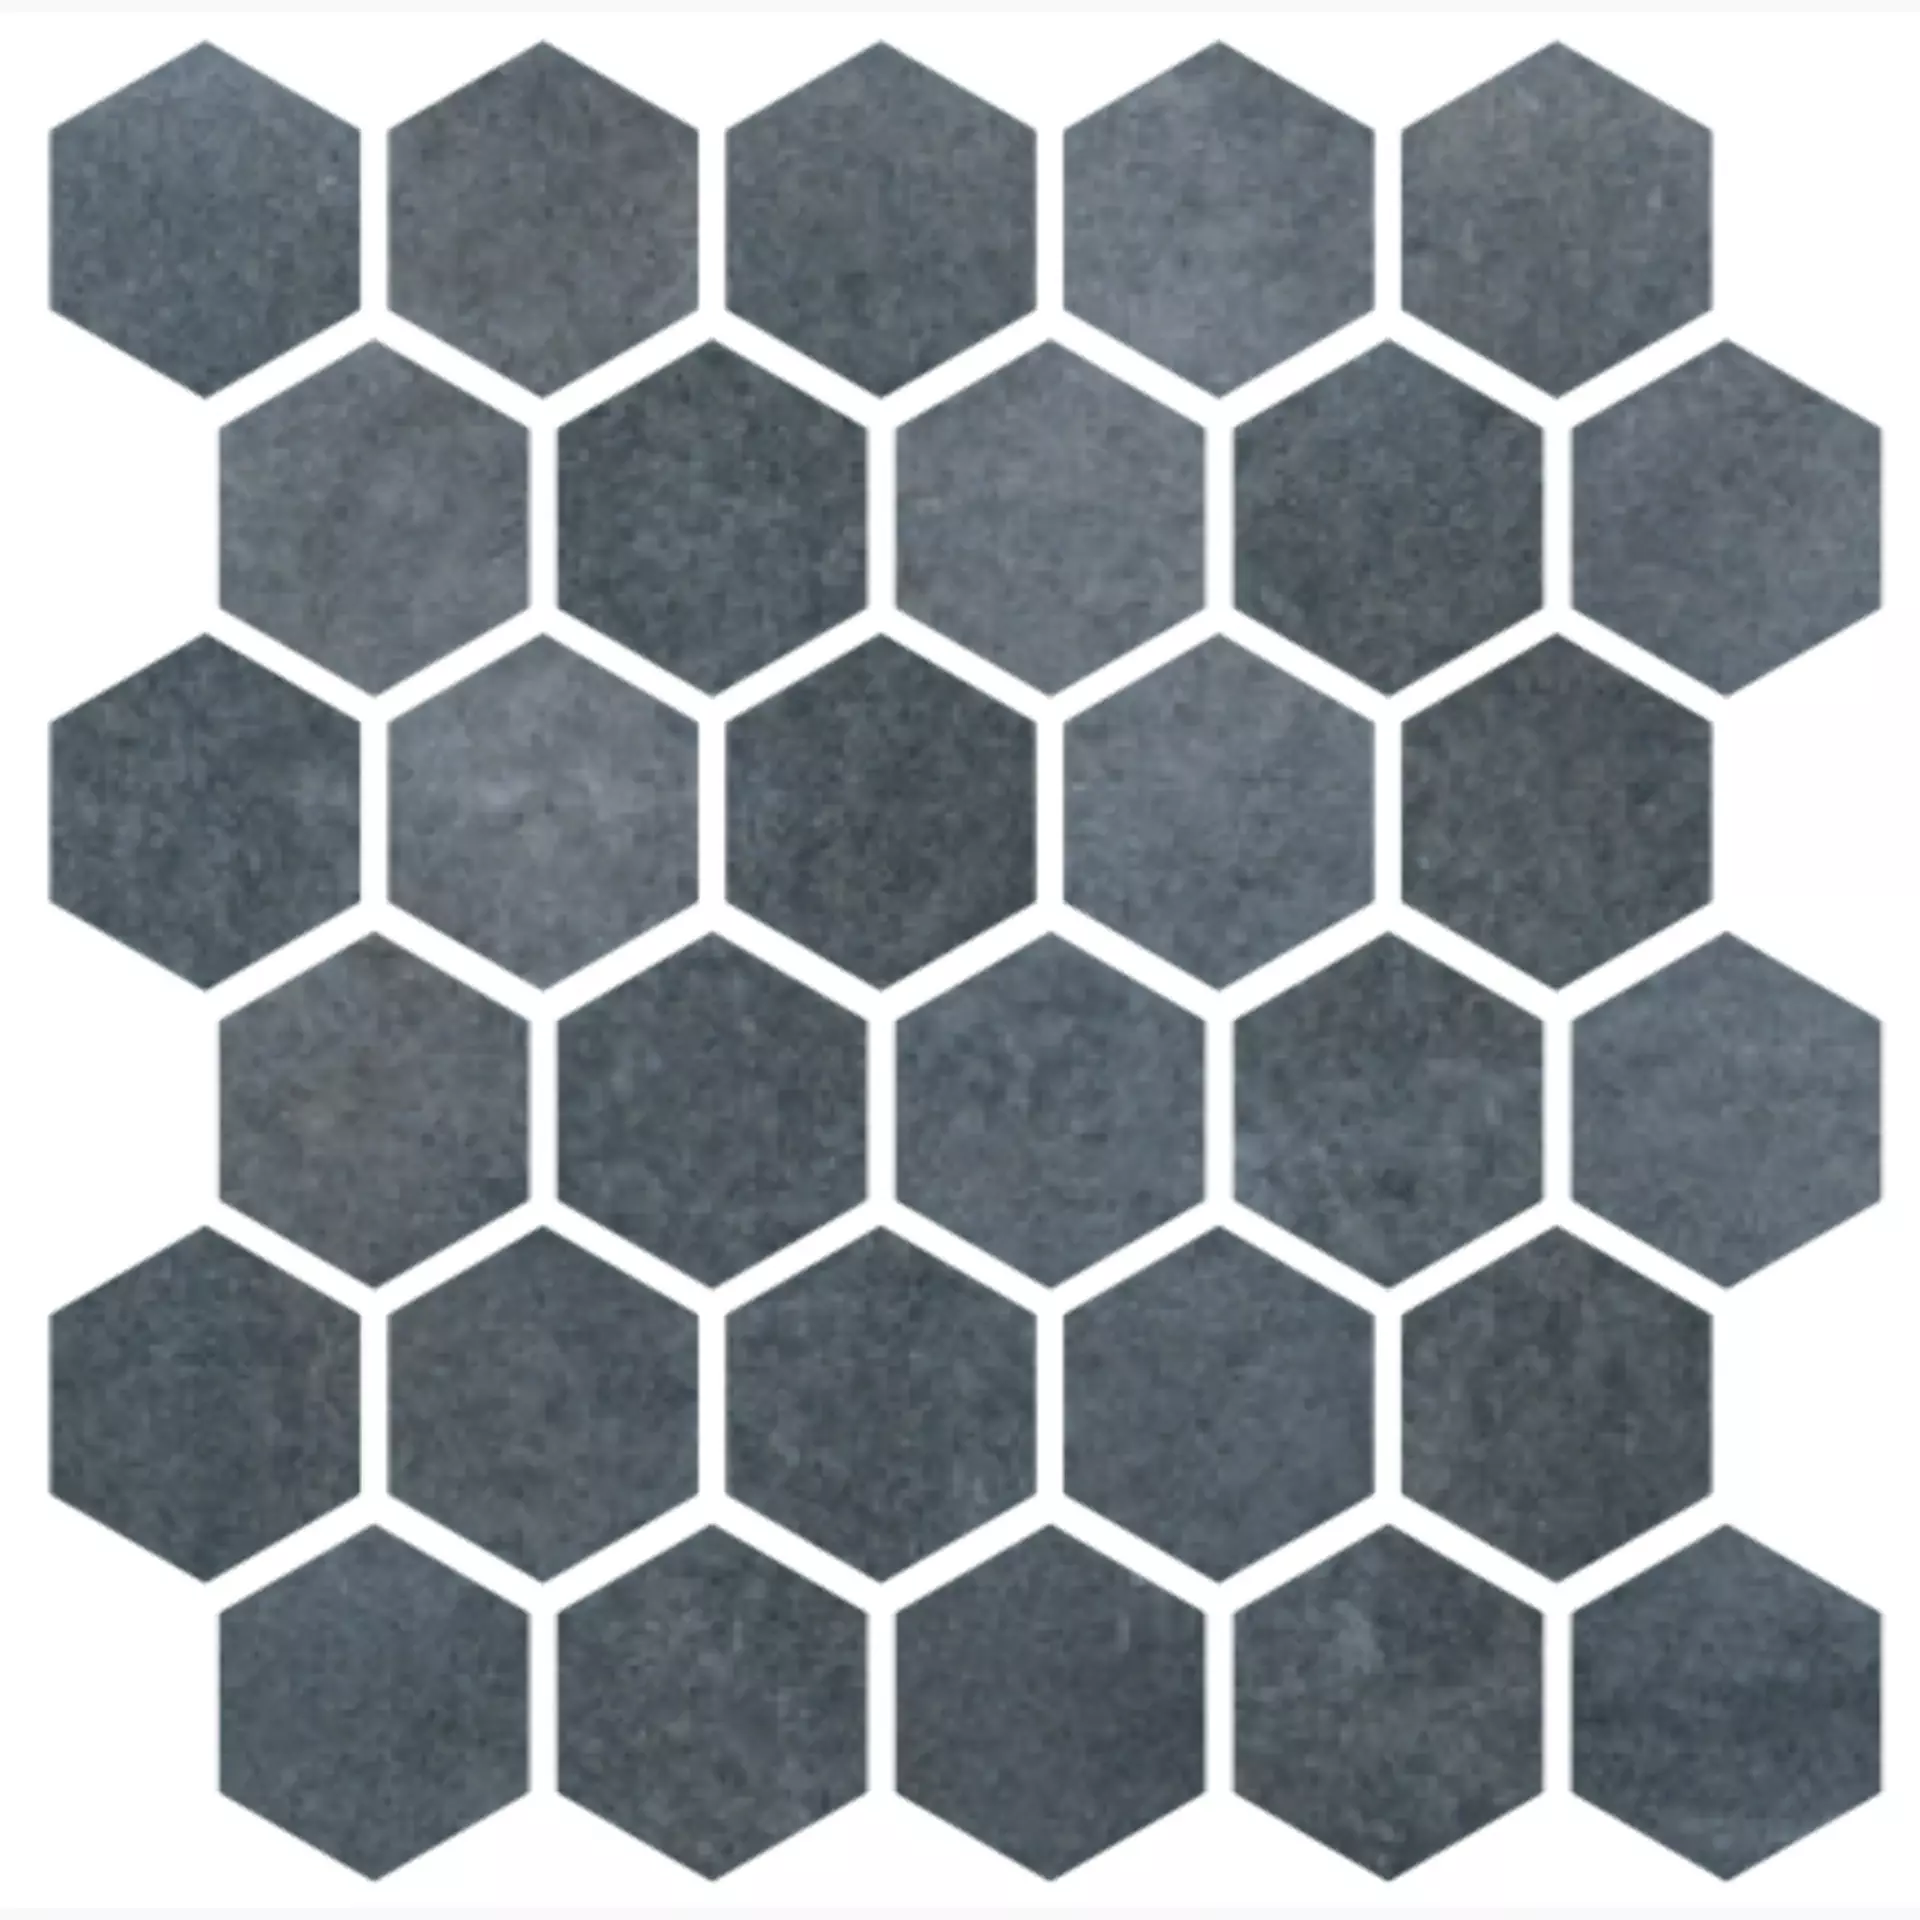 CIR Materia Prima Navy Sea Naturale Mosaic Hexagon 1069915 27x27cm 10mm